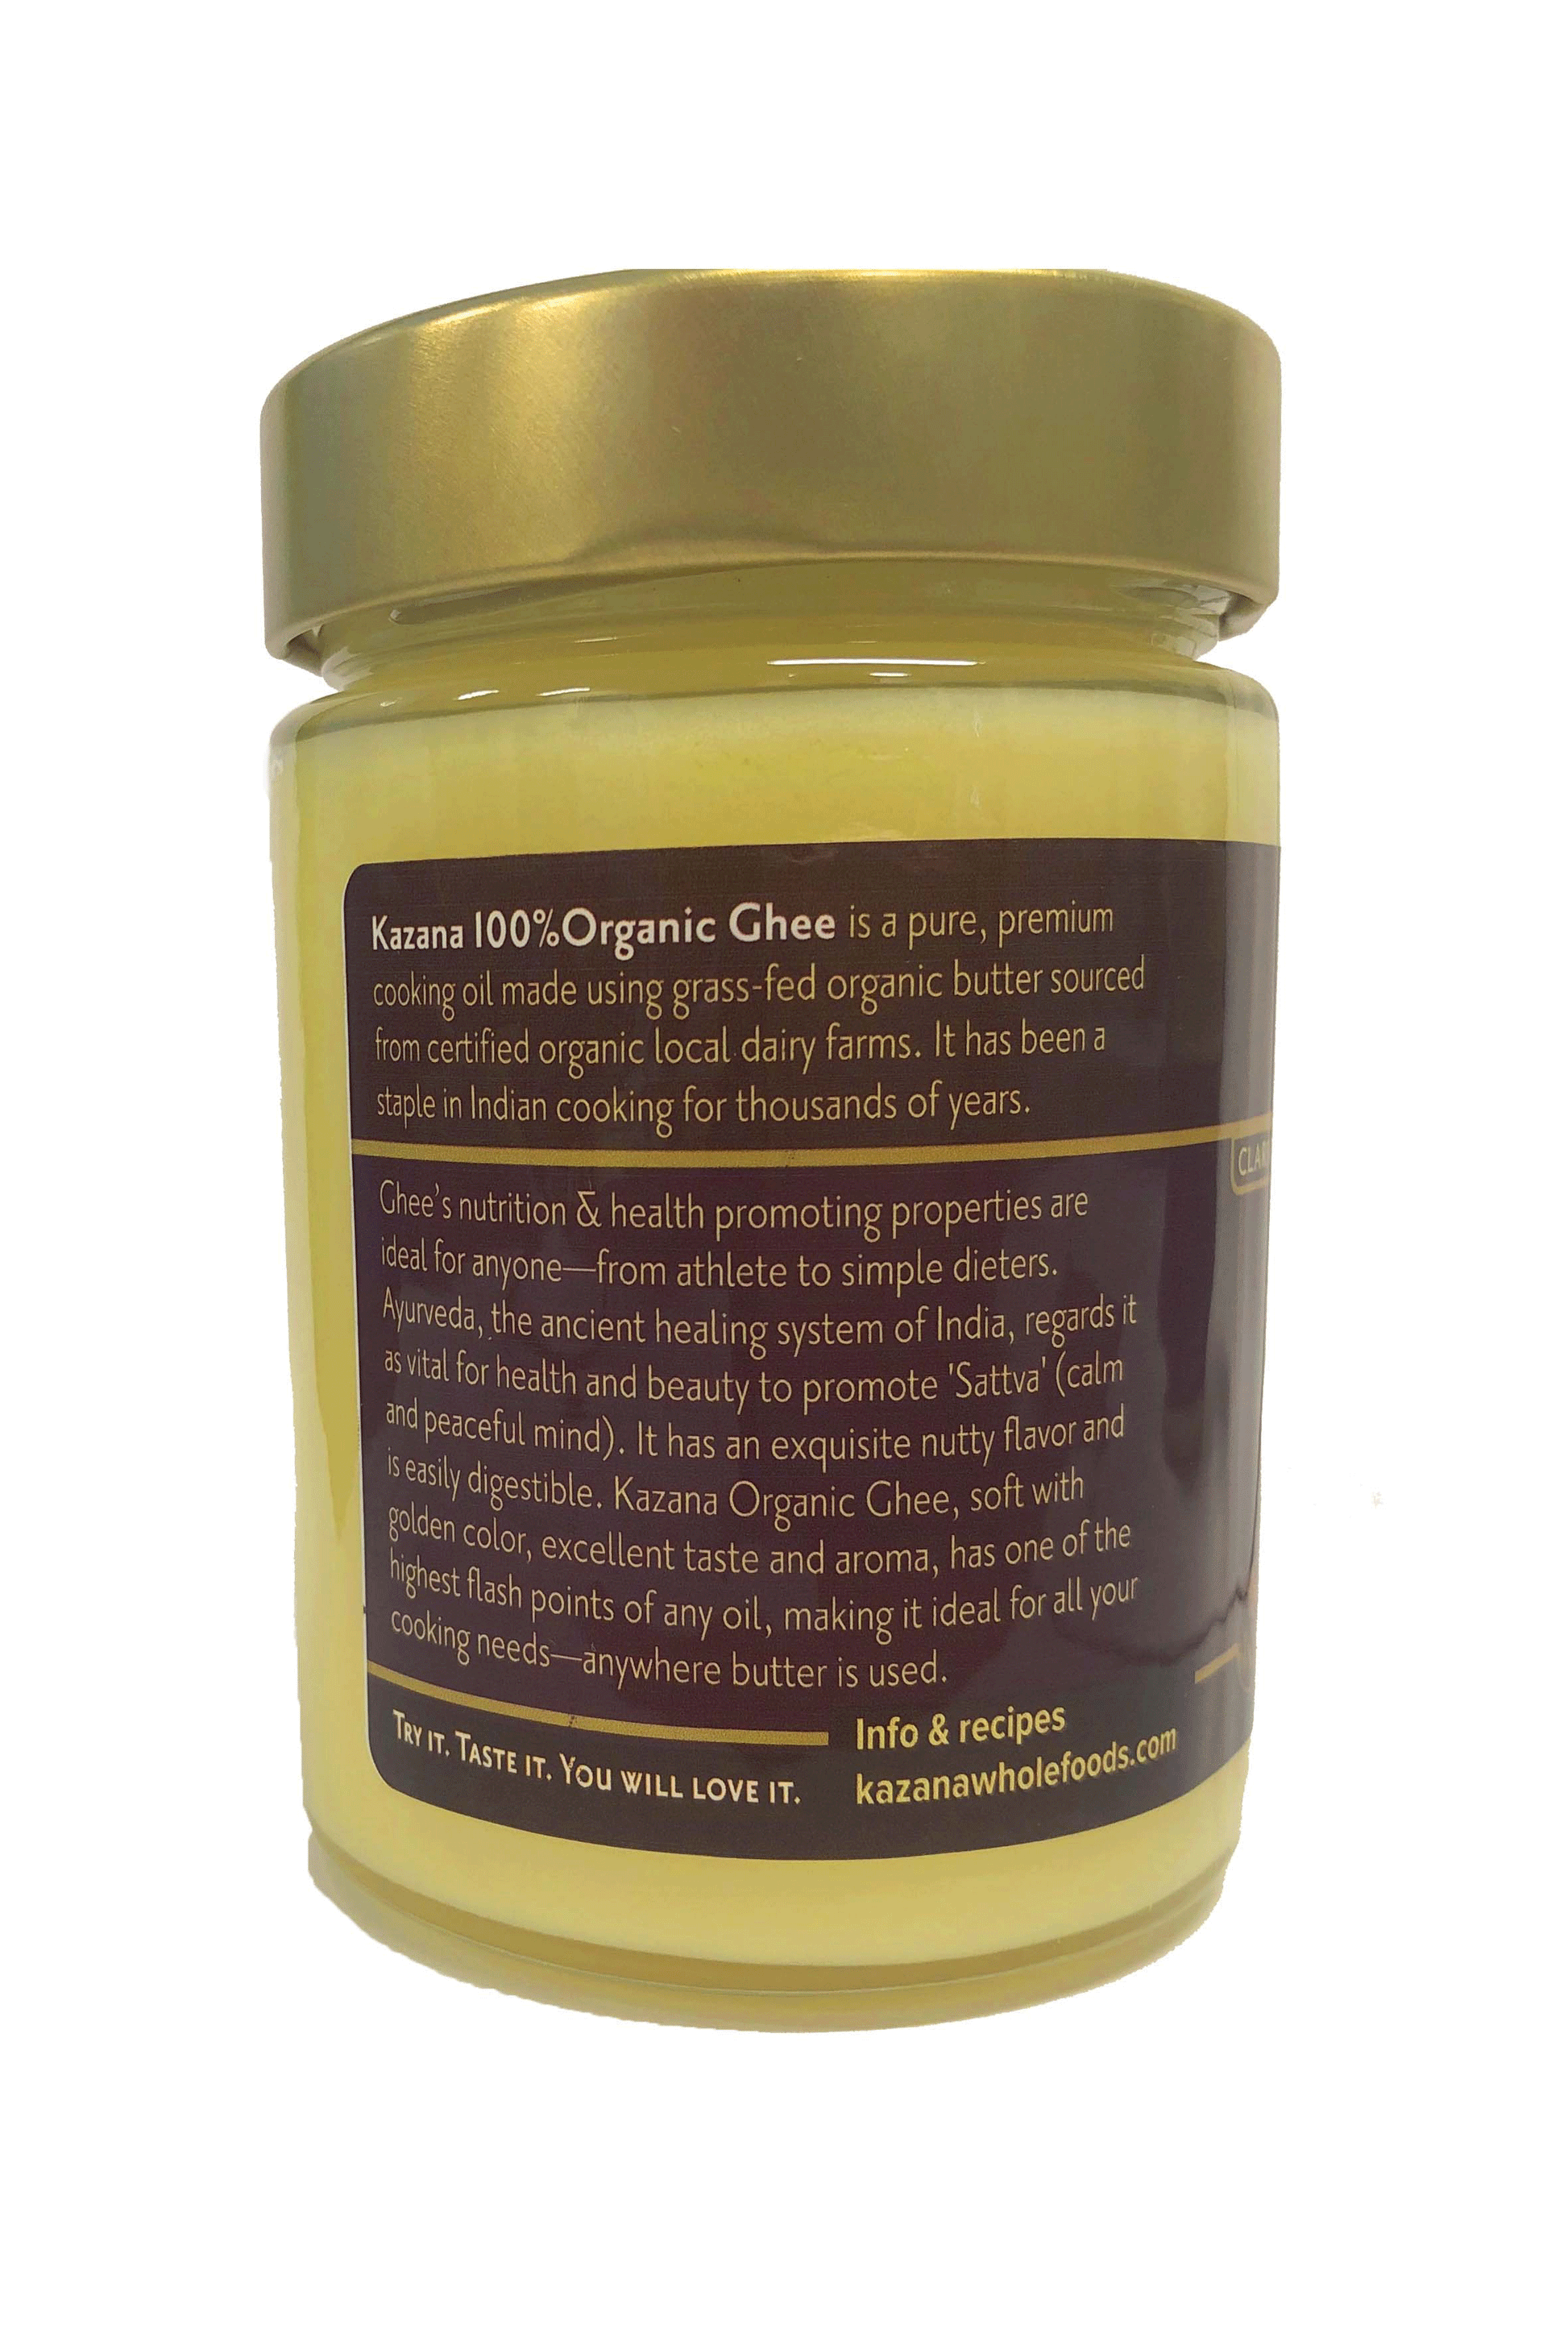 Wholesale Ghee, Organic 10oz(284g) Jar